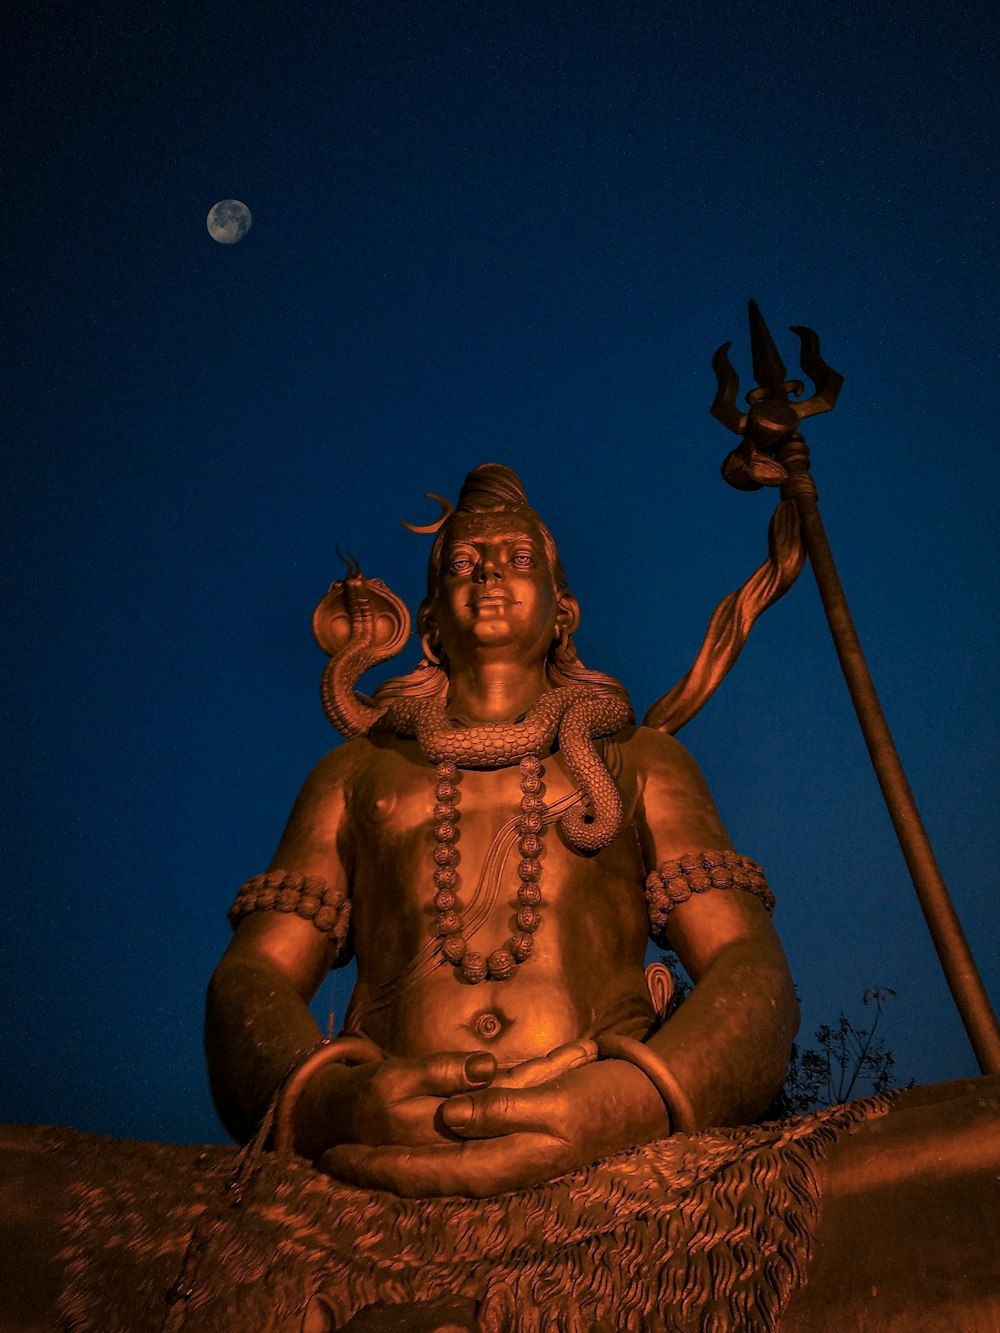 gold buddha statue under blue sky during nighttime